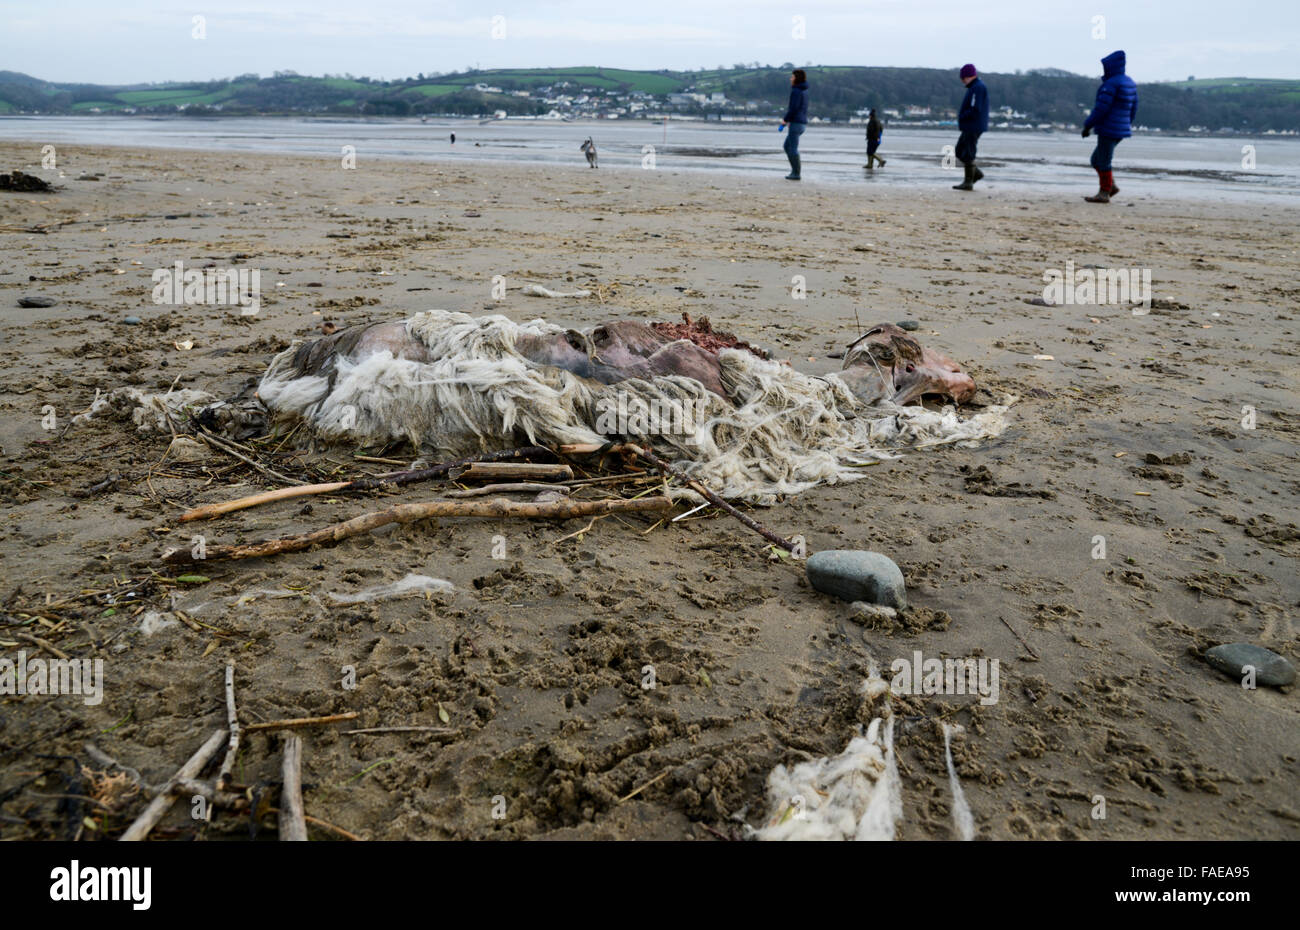 South Wales, UK, Monday 28th December 2015. A sheep carcase washed up on Llanstephan beach amongst high tide debris. Carmarthenshire, Wales. UK. Credit:  Algis Motuza/Alamy Live News Stock Photo